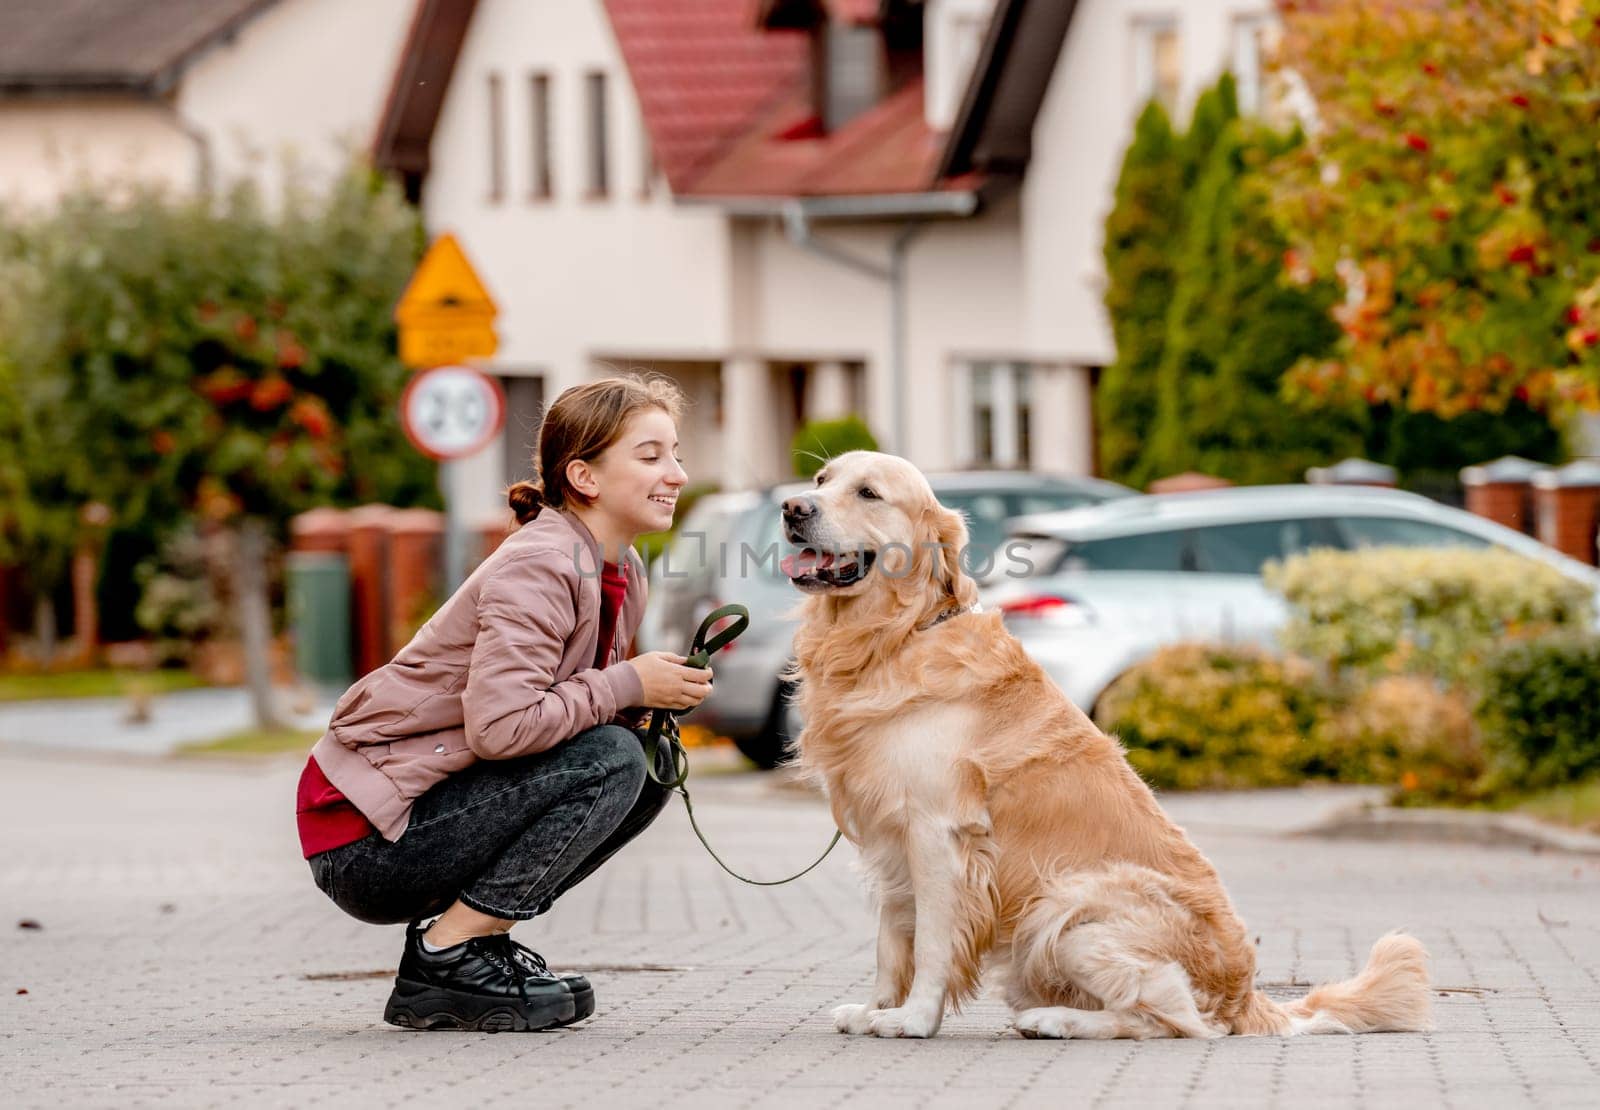 Preteen girl with golden retriever dog by tan4ikk1